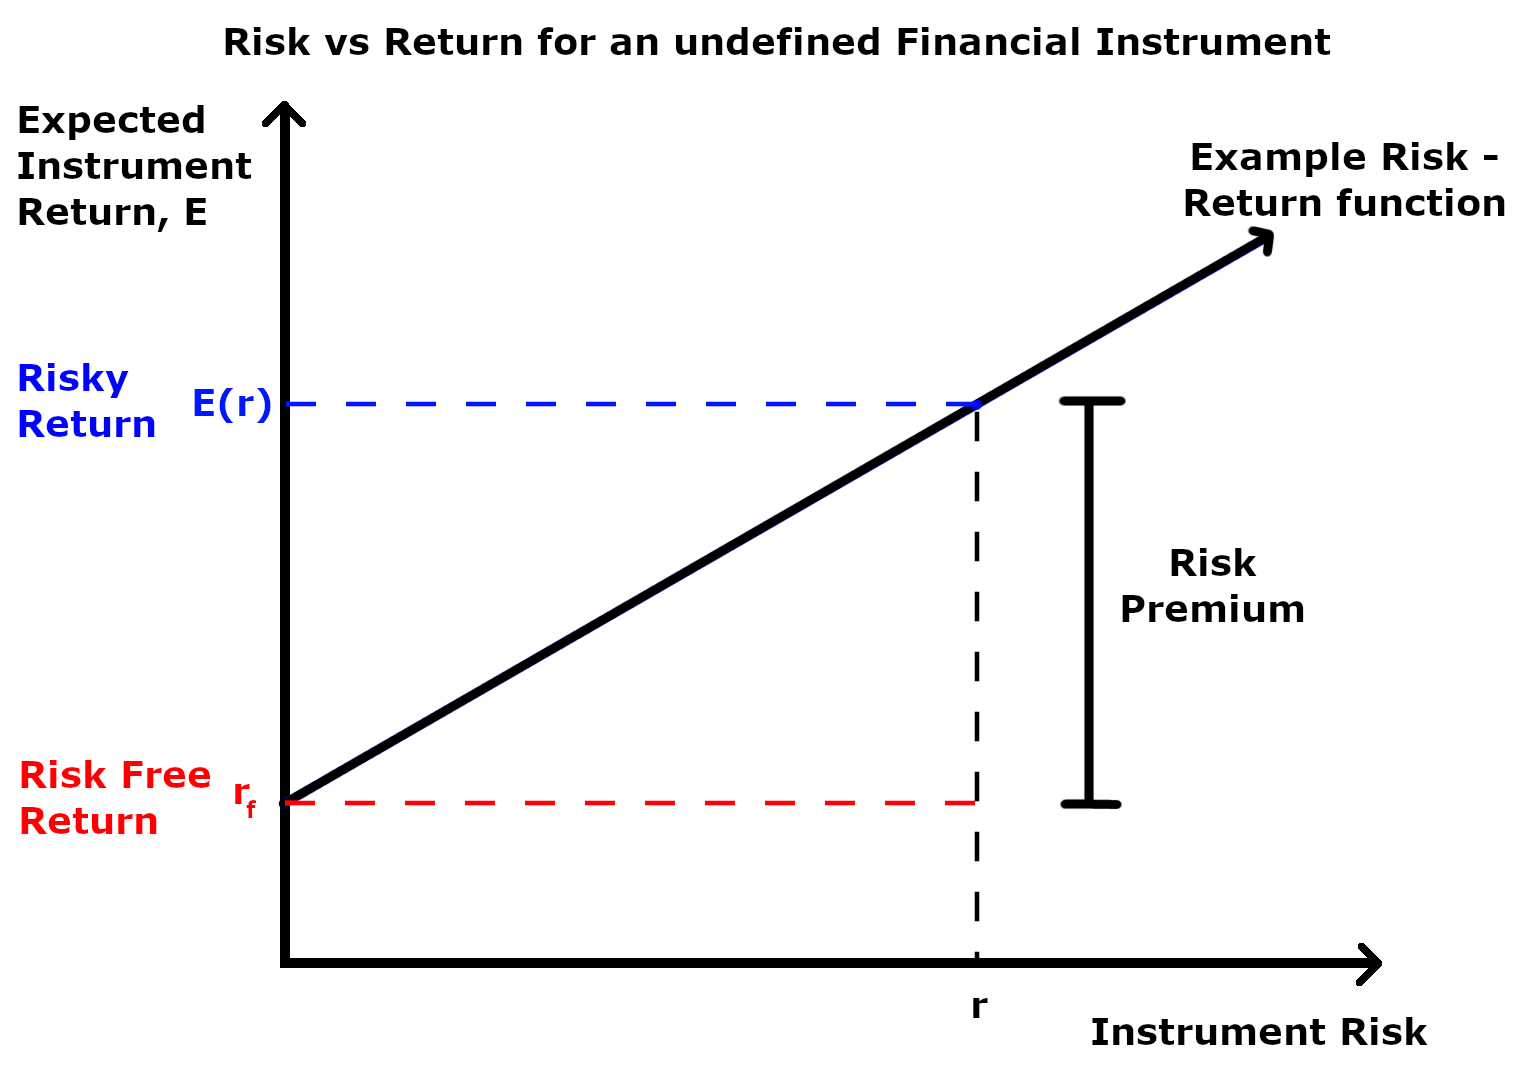 Risk_Return_Function_with_Risk_Premium